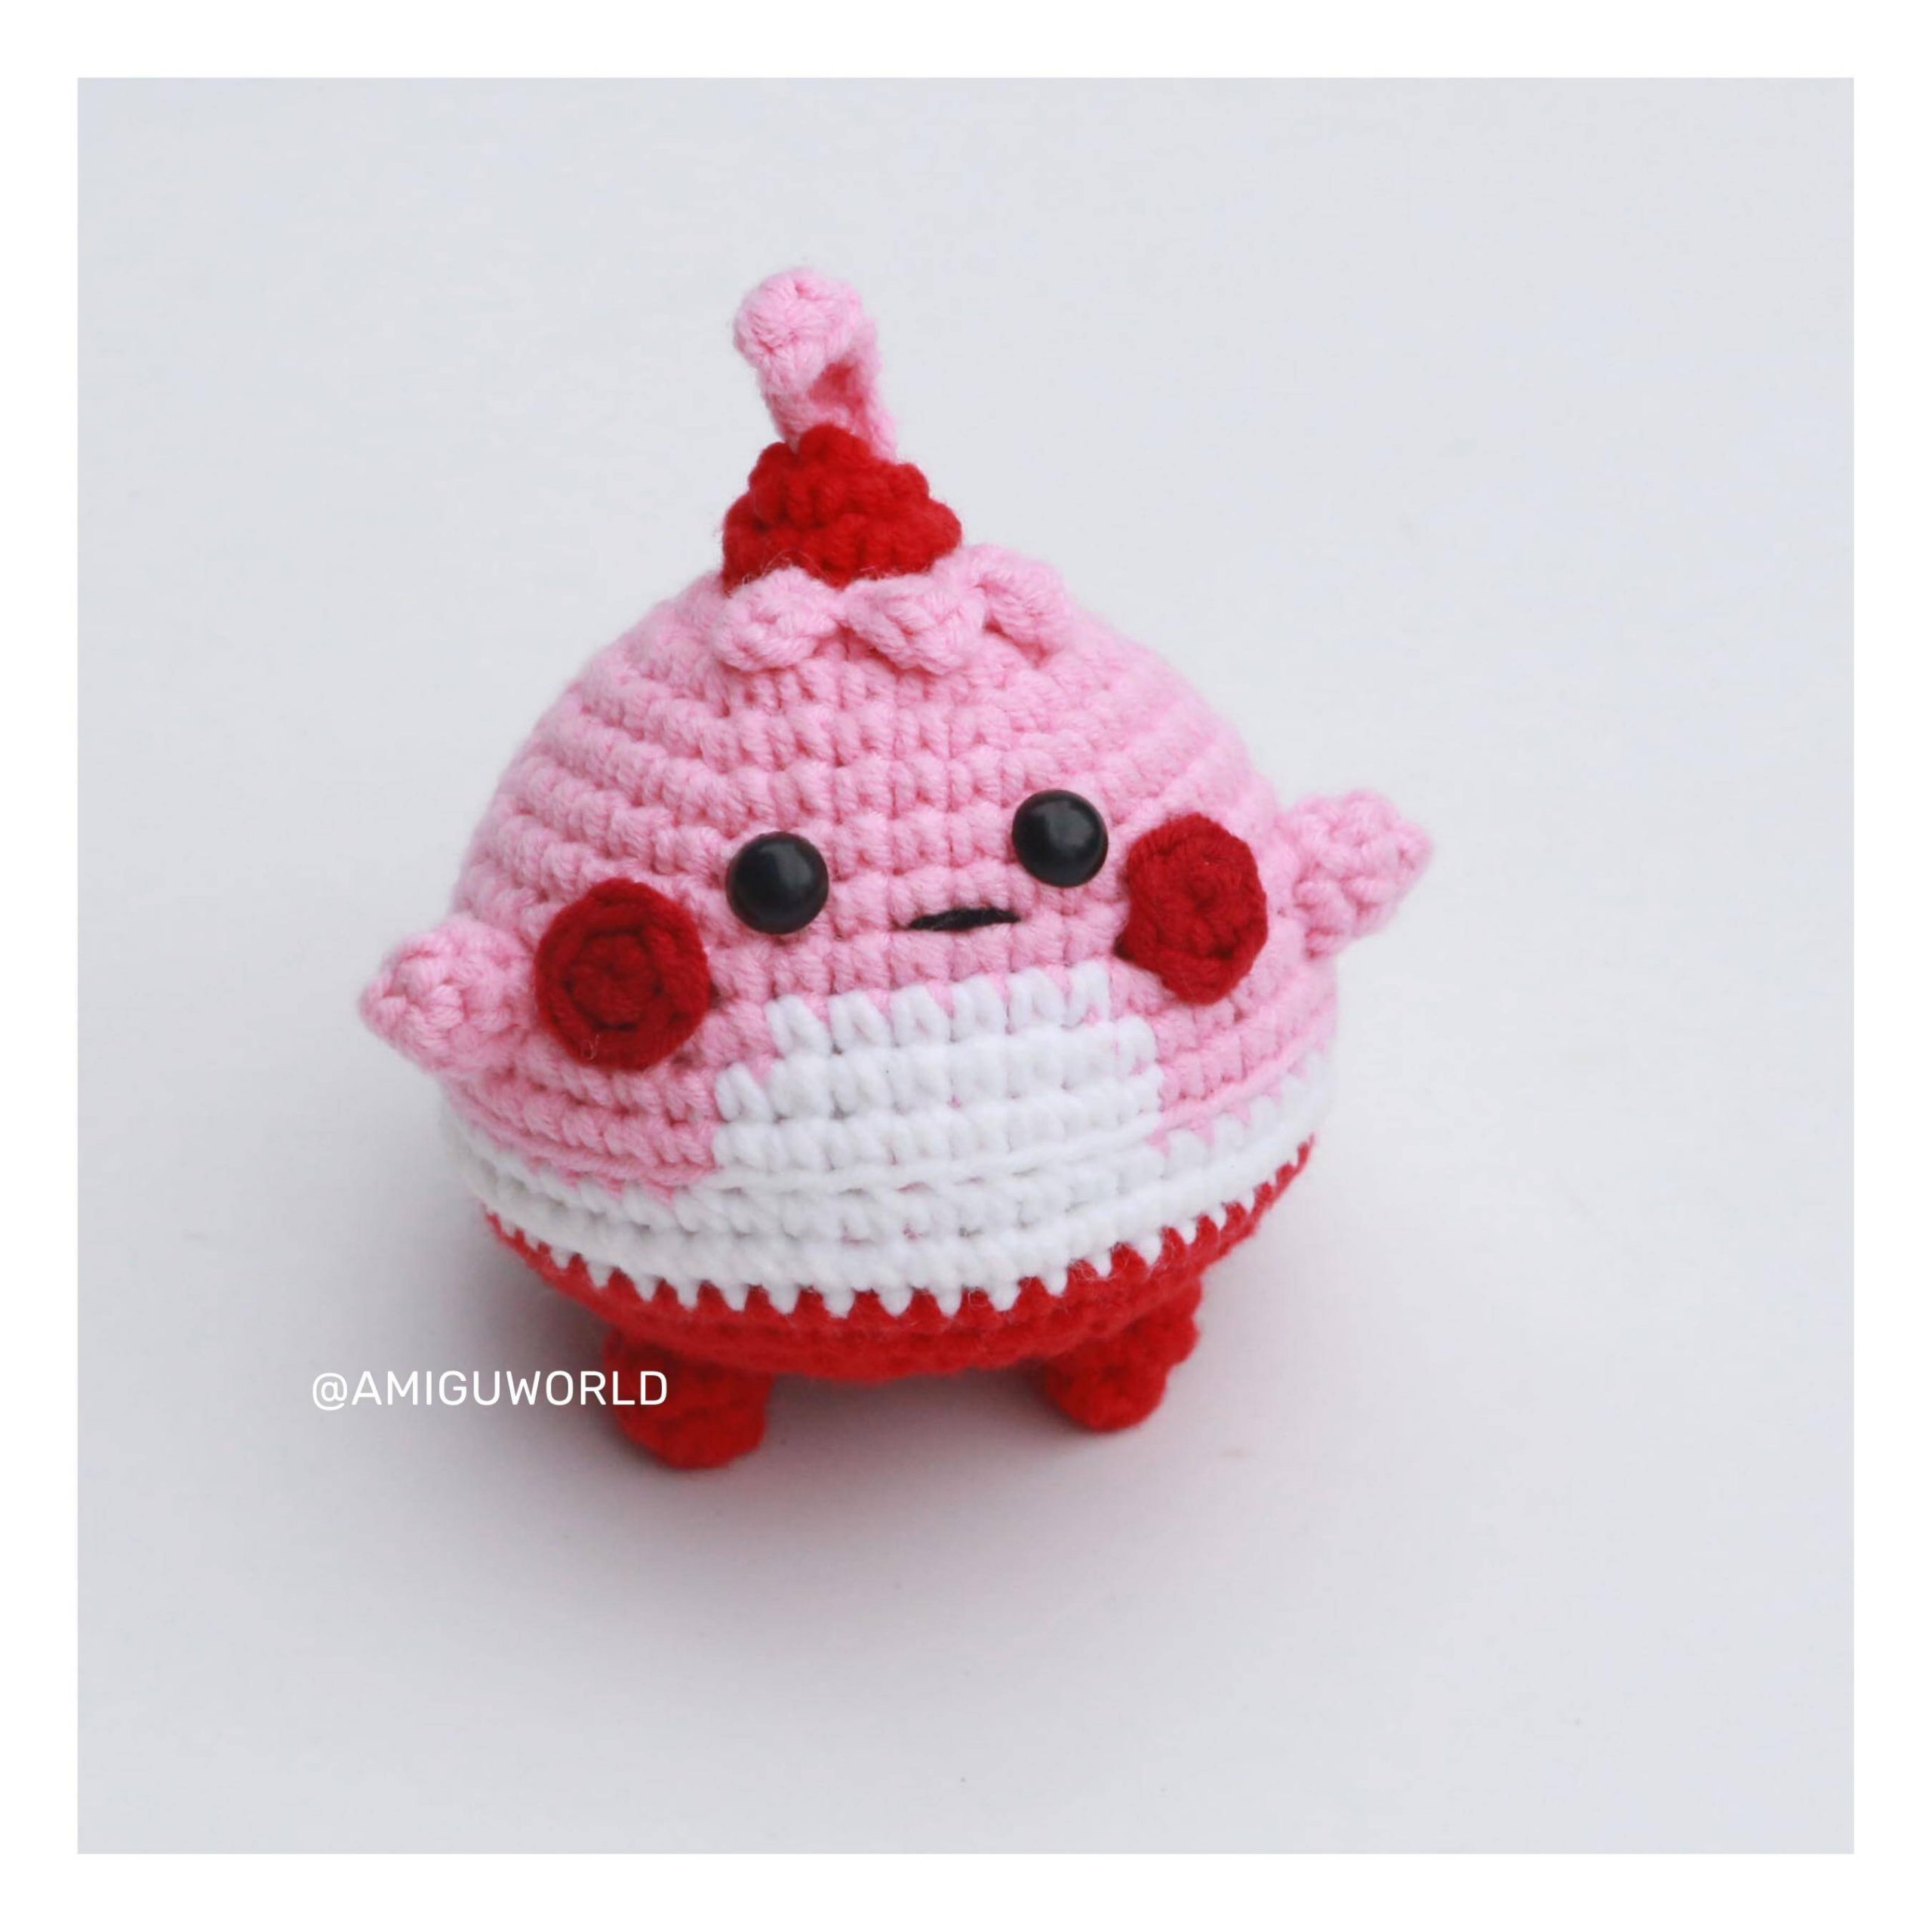 Happiny-amigurumi-crochet-pattern-amiguworld (7)